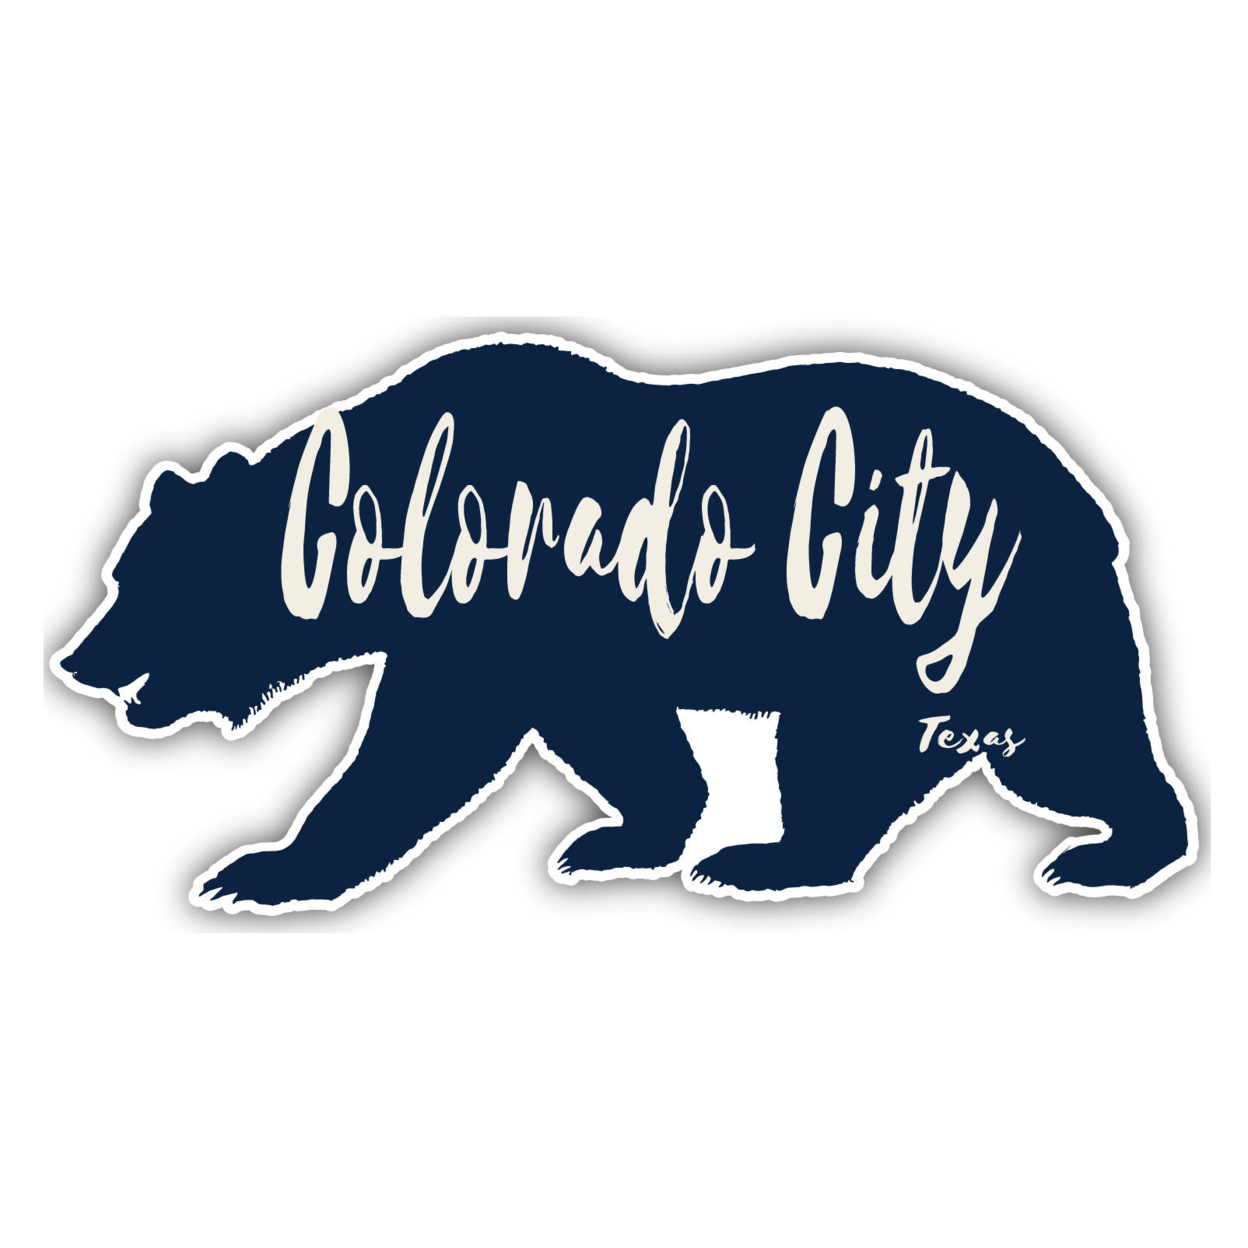 Colorado City Texas Souvenir Decorative Stickers (Choose Theme And Size) - 4-Pack, 12-Inch, Bear